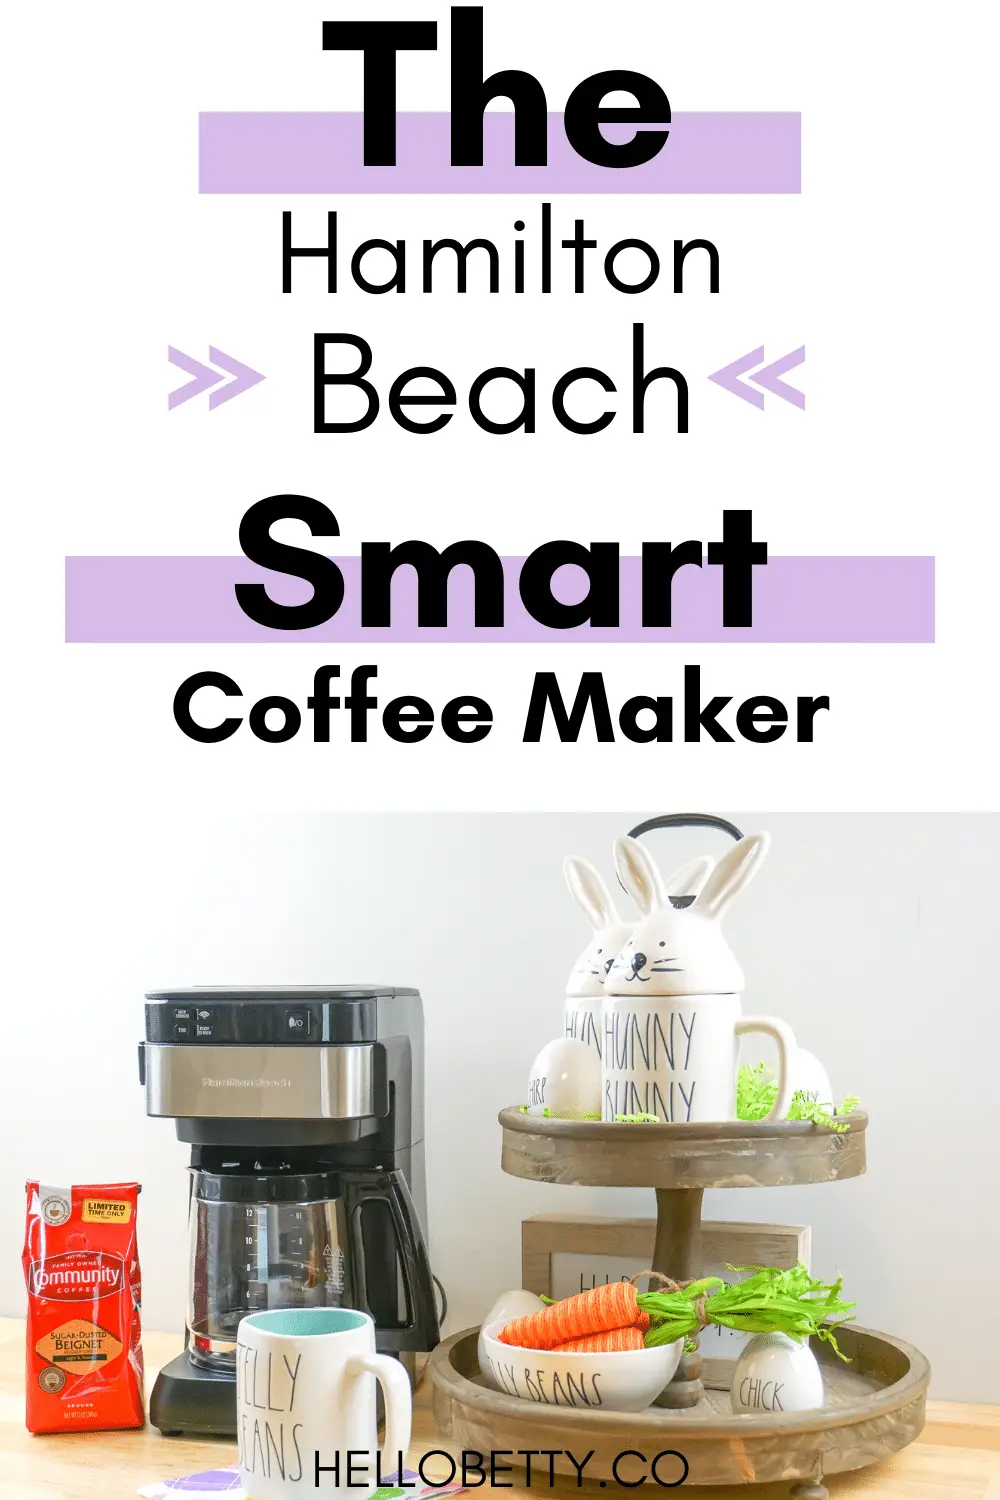 Hamilton Beach Smart Coffee Maker